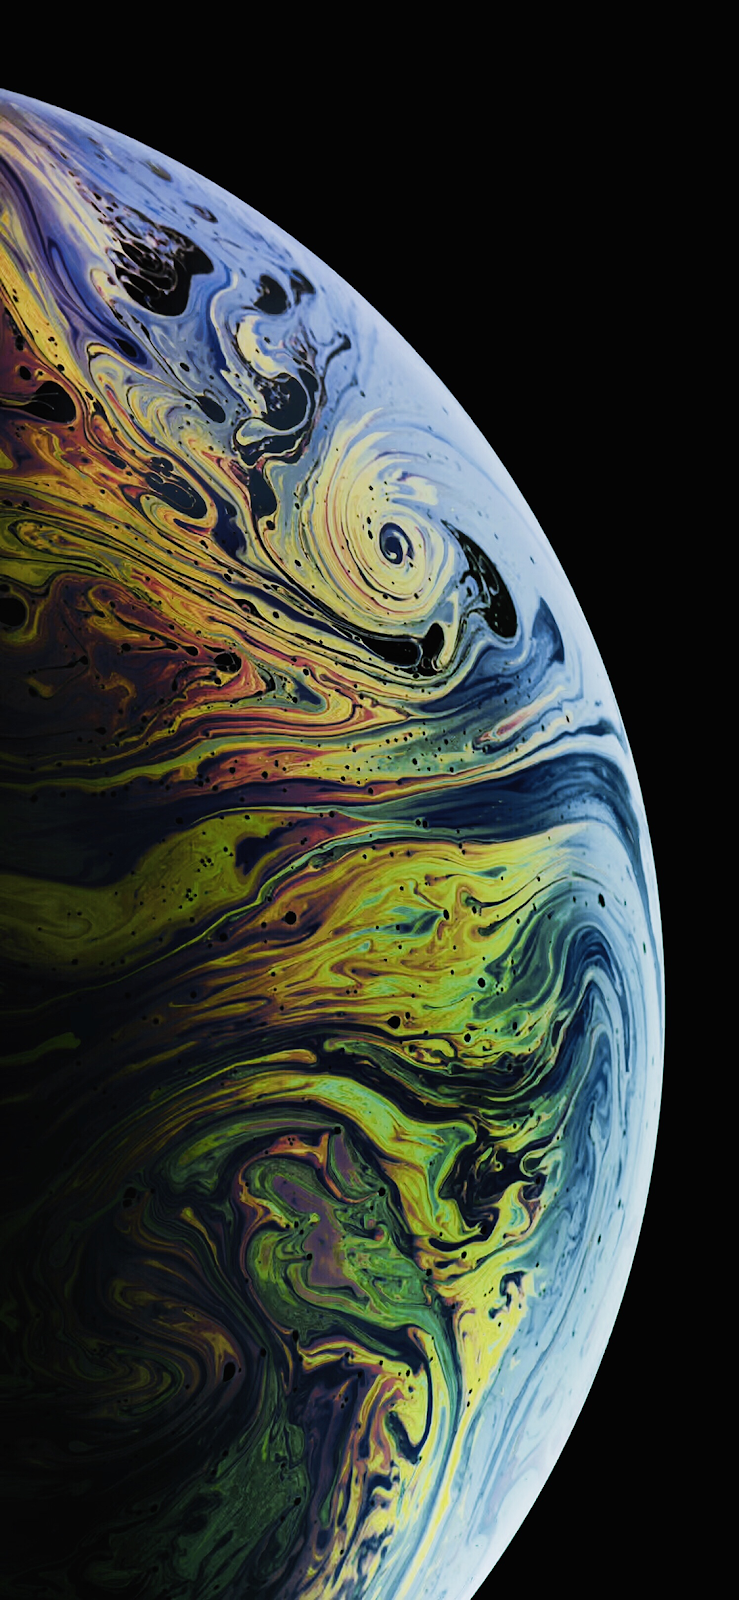 IPhone XS Max Earth Wallpaper. Fundaluri